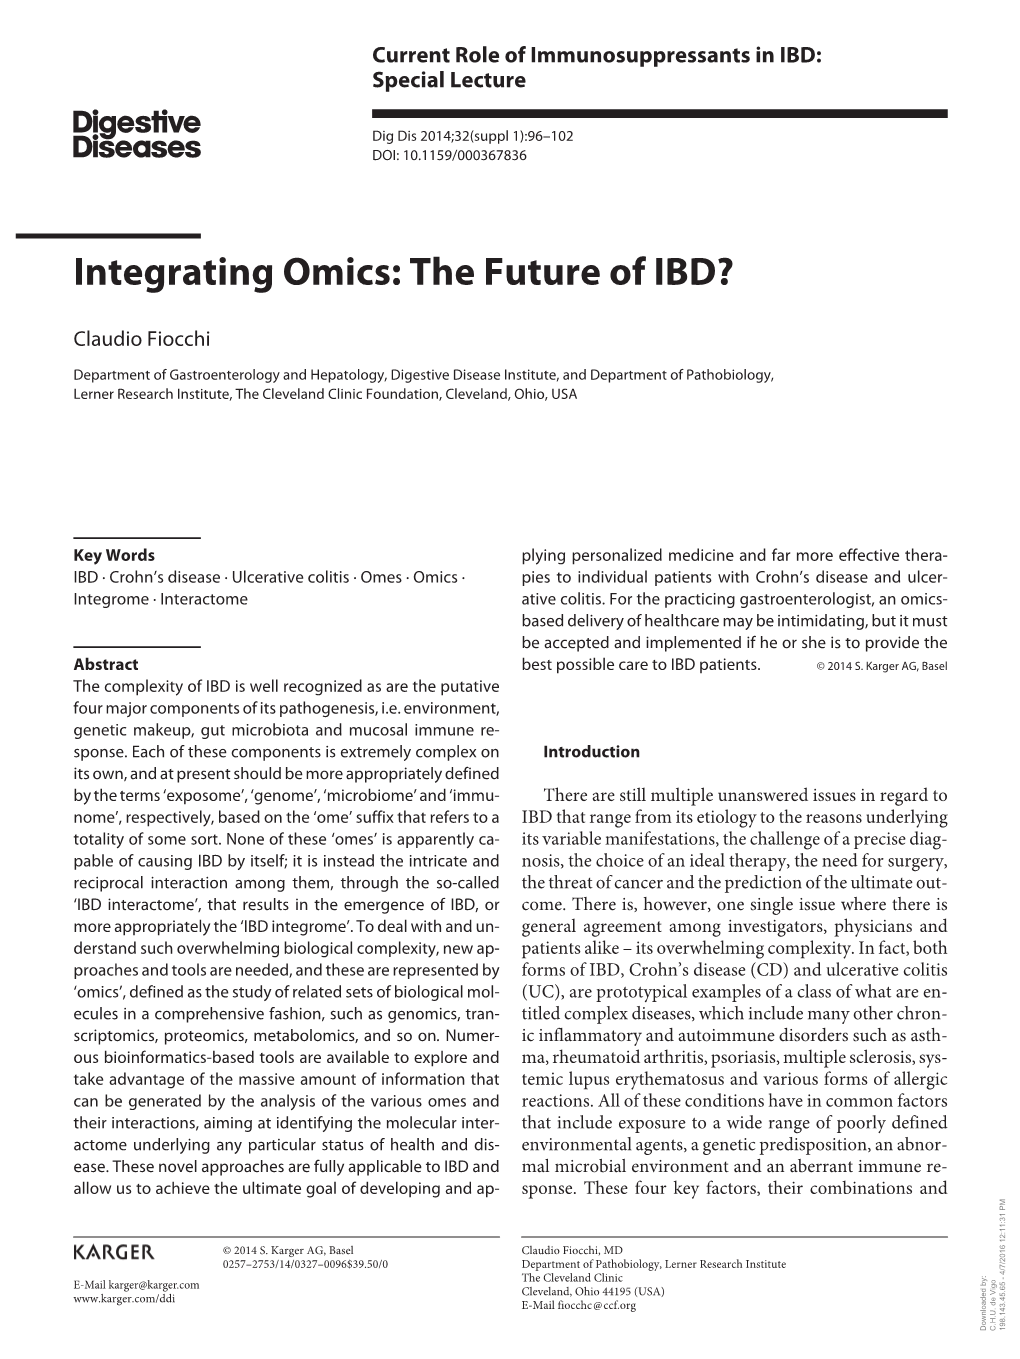 Integrating Omics: the Future of IBD?